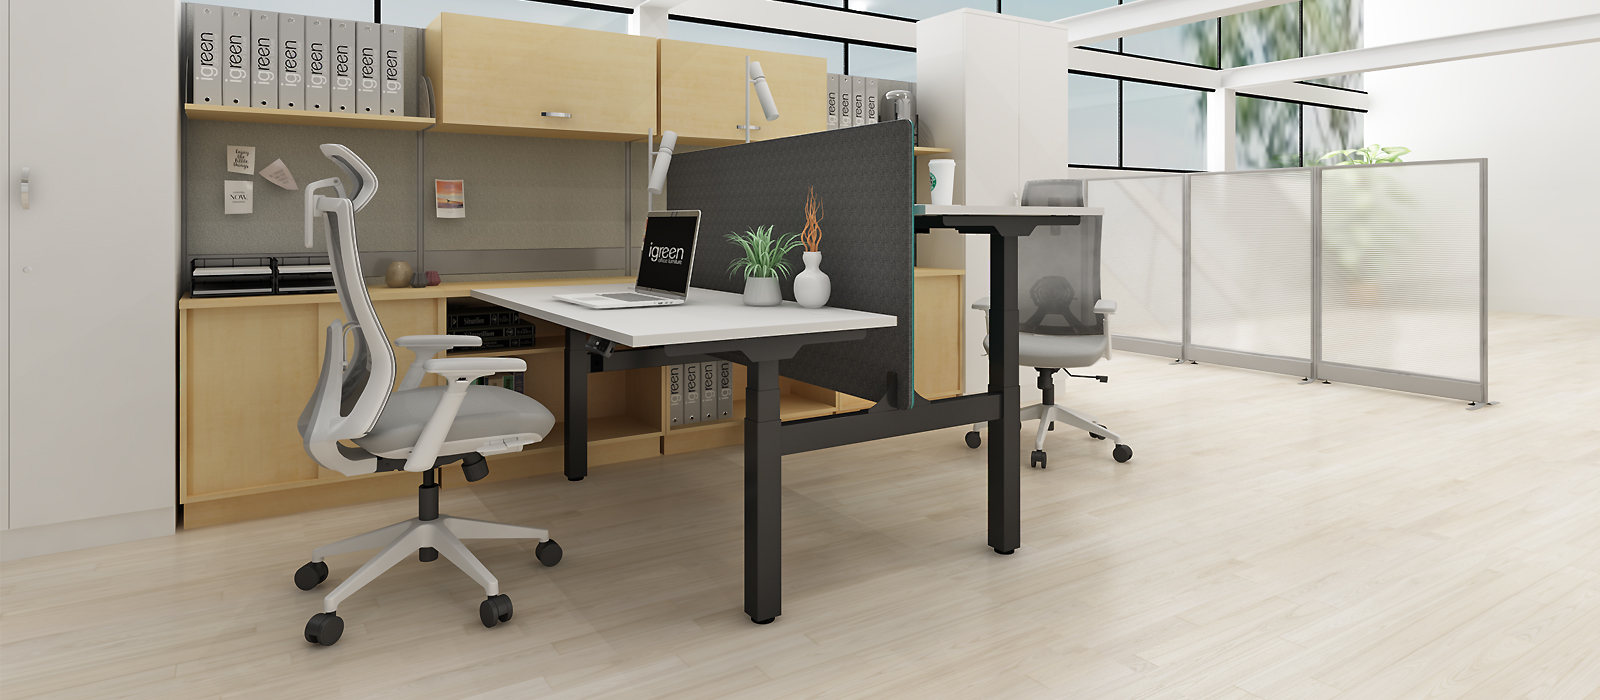 E7 Premium Height Standing Desk_Bench Workstation